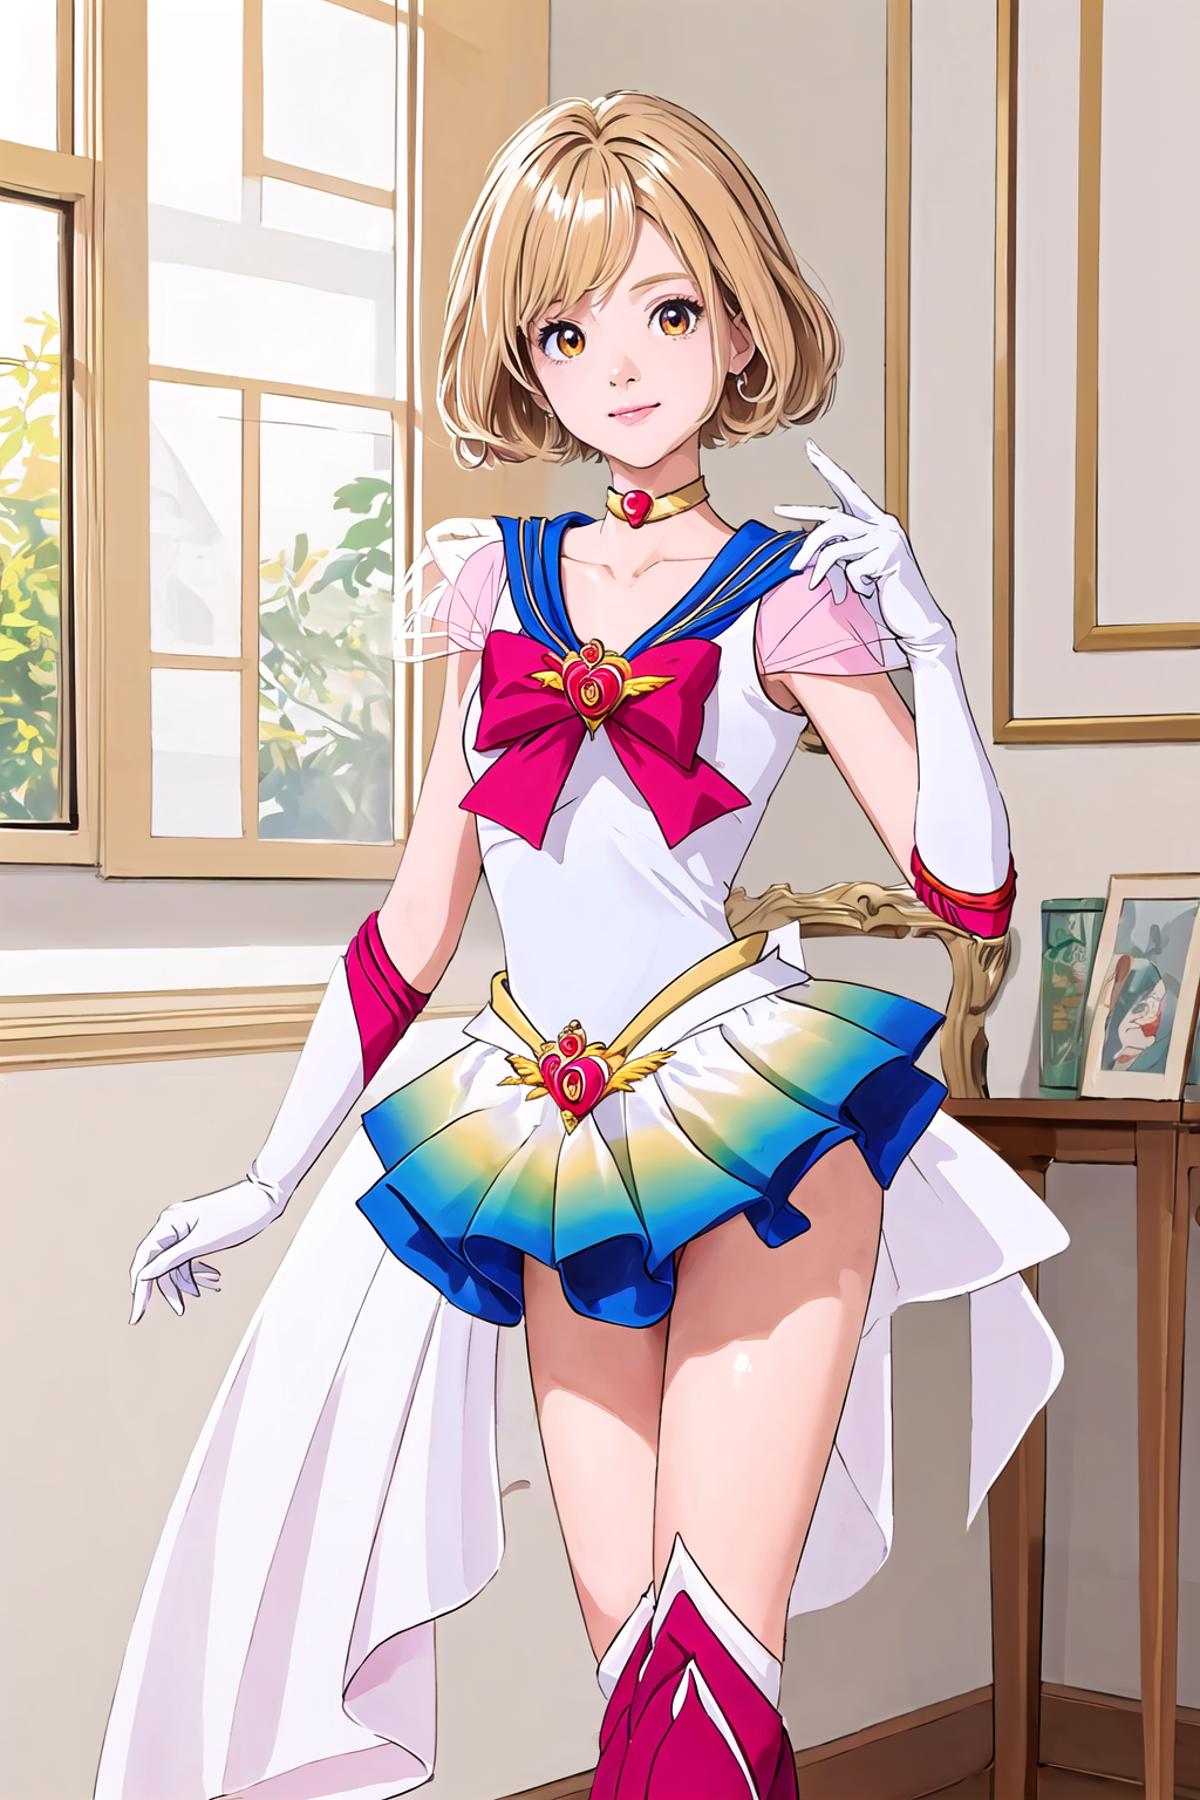 Super Sailor Moon Outfit [Costume Lora] / スーパーセーラームーン衣装 image by memolemon123